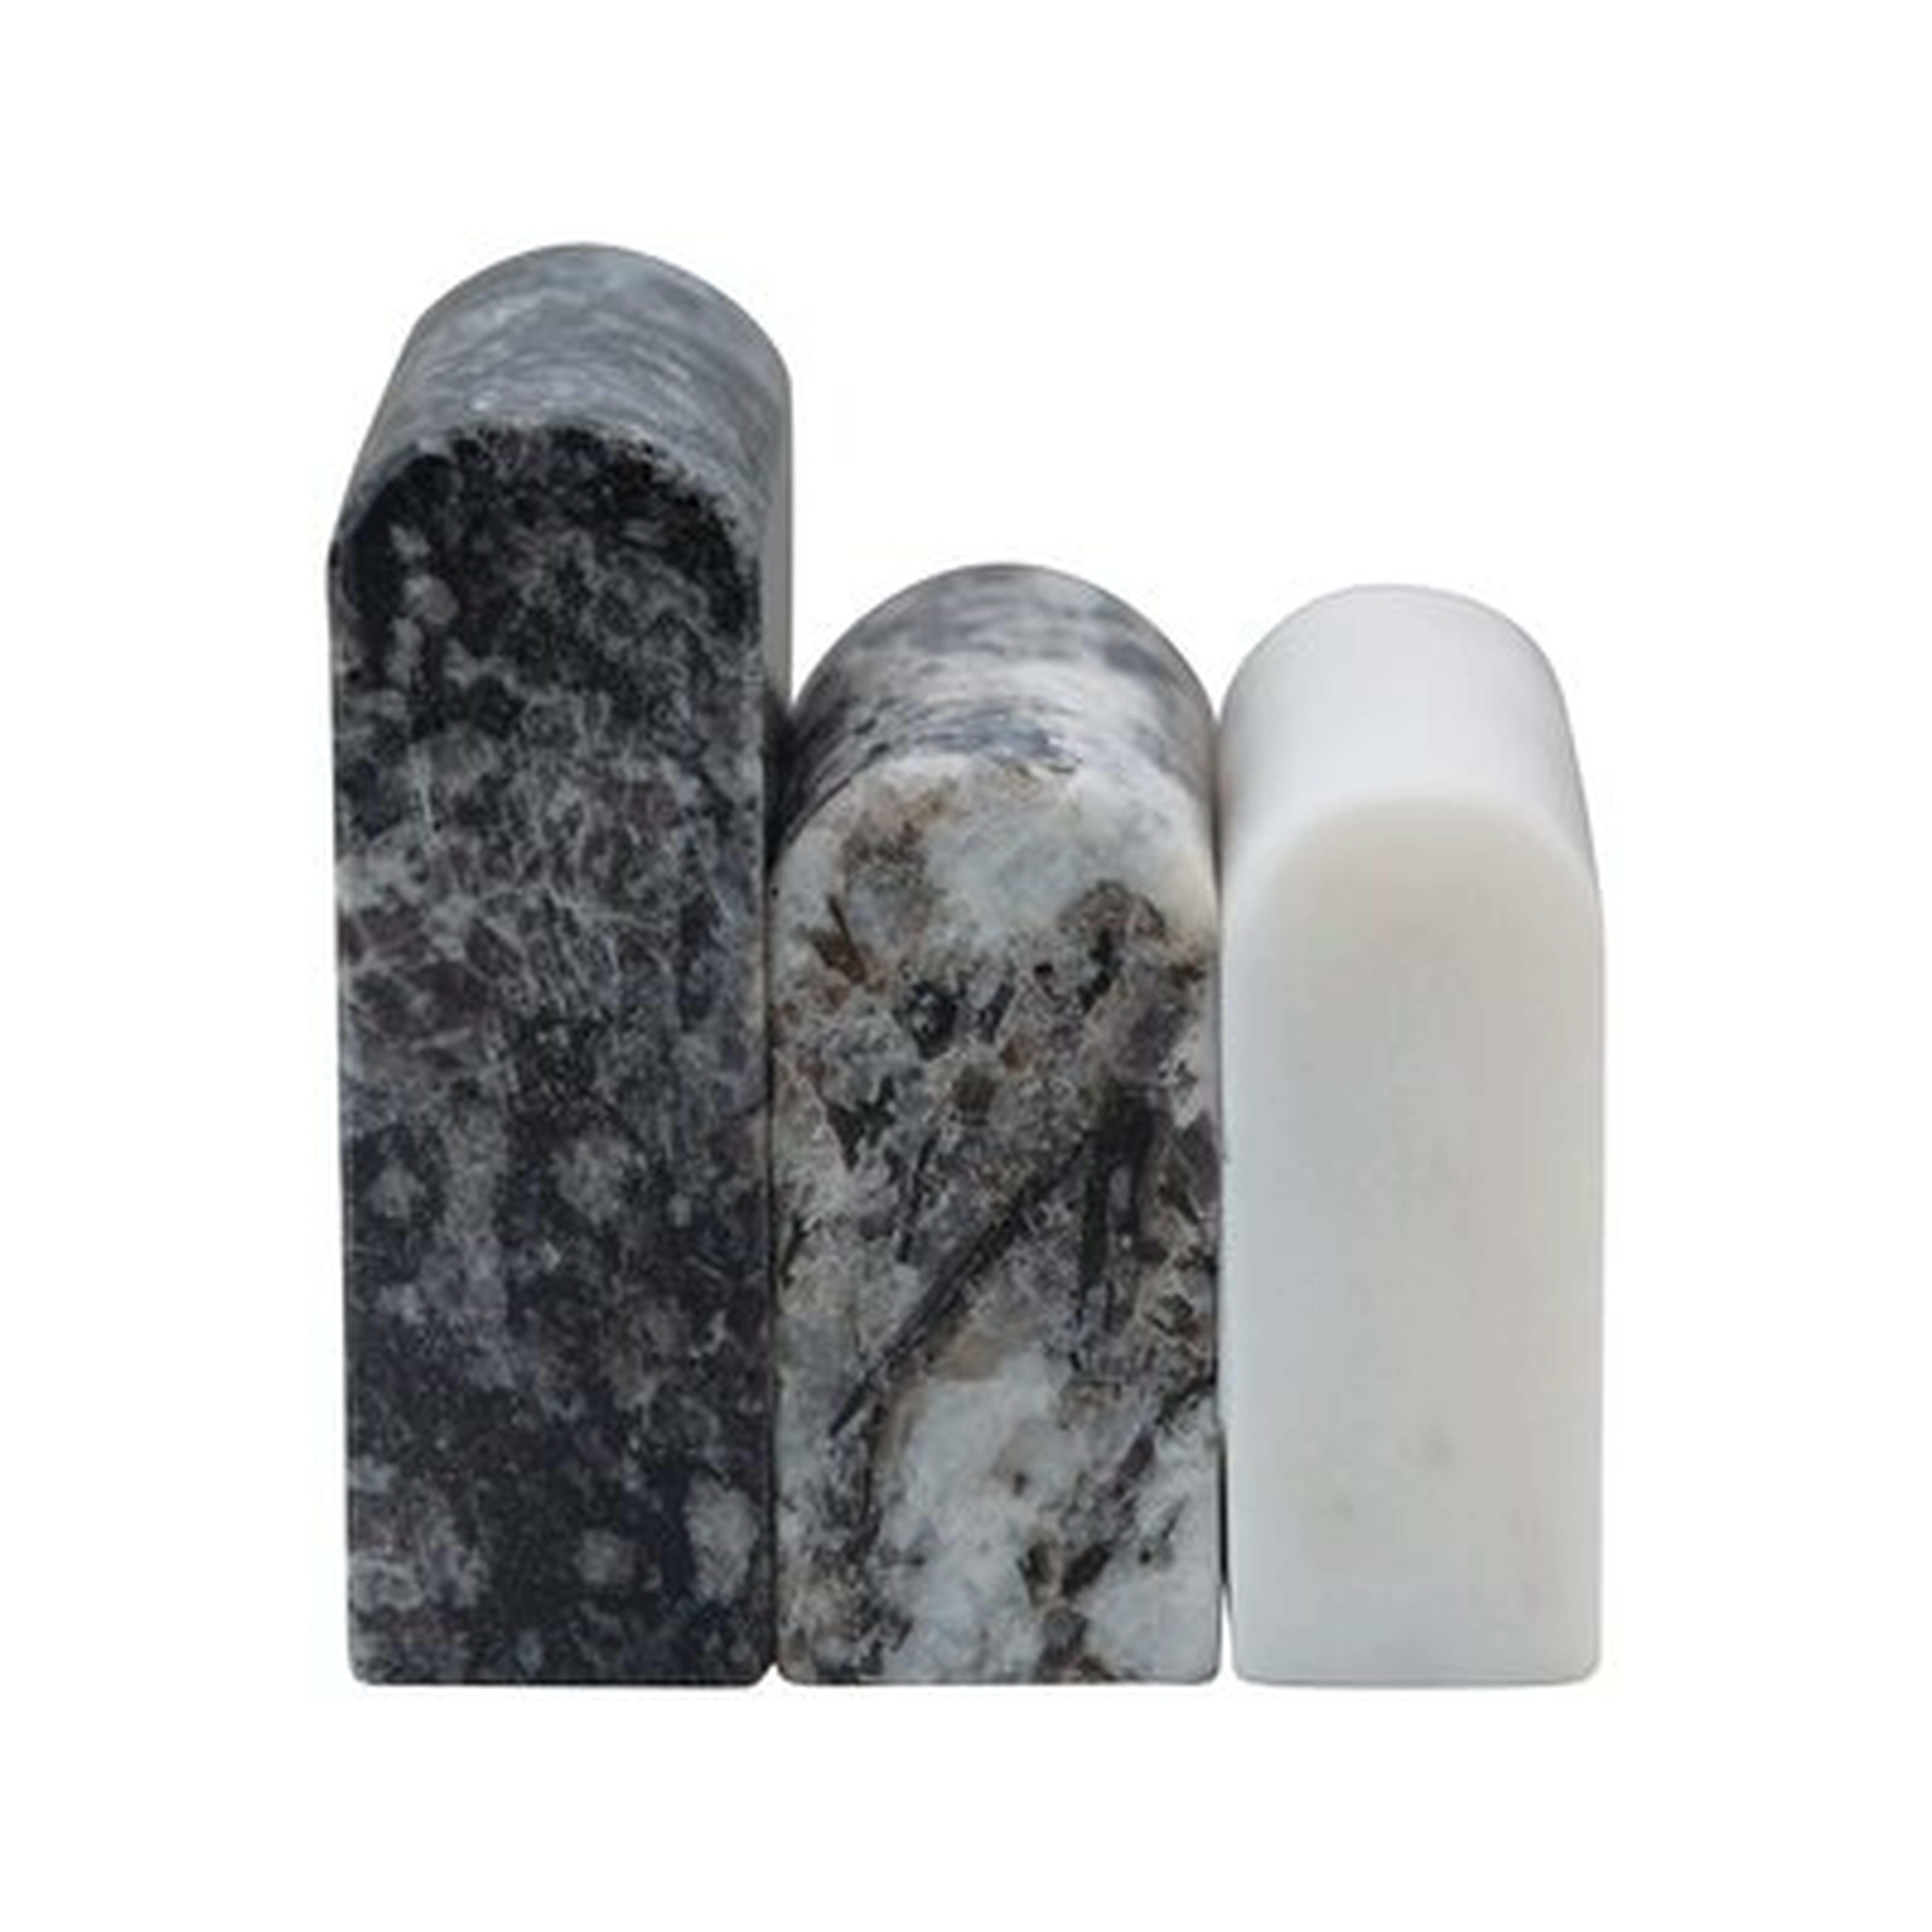 Decorative Granite & Marble Objects, Set Of 3 - Wayfair